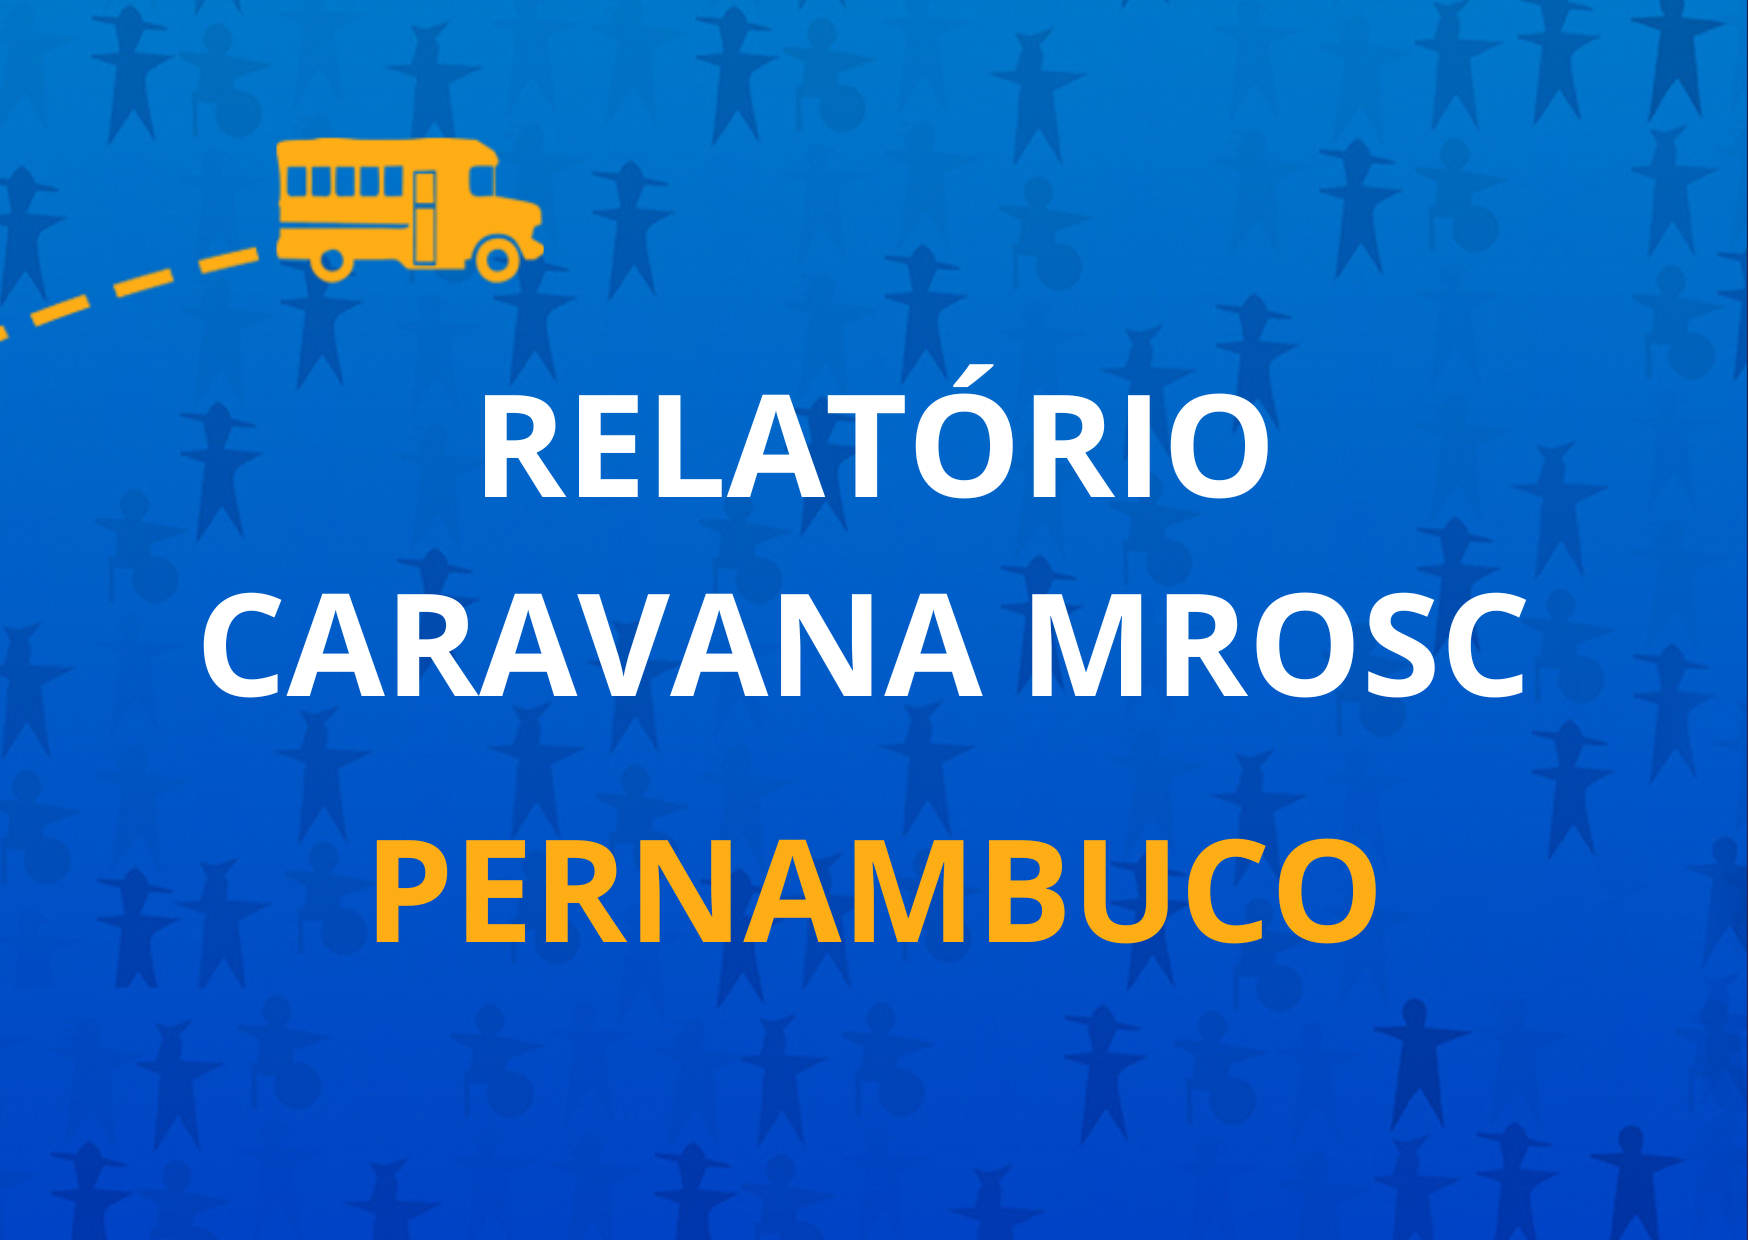 Relatório Caravana MROSC Pernambuco